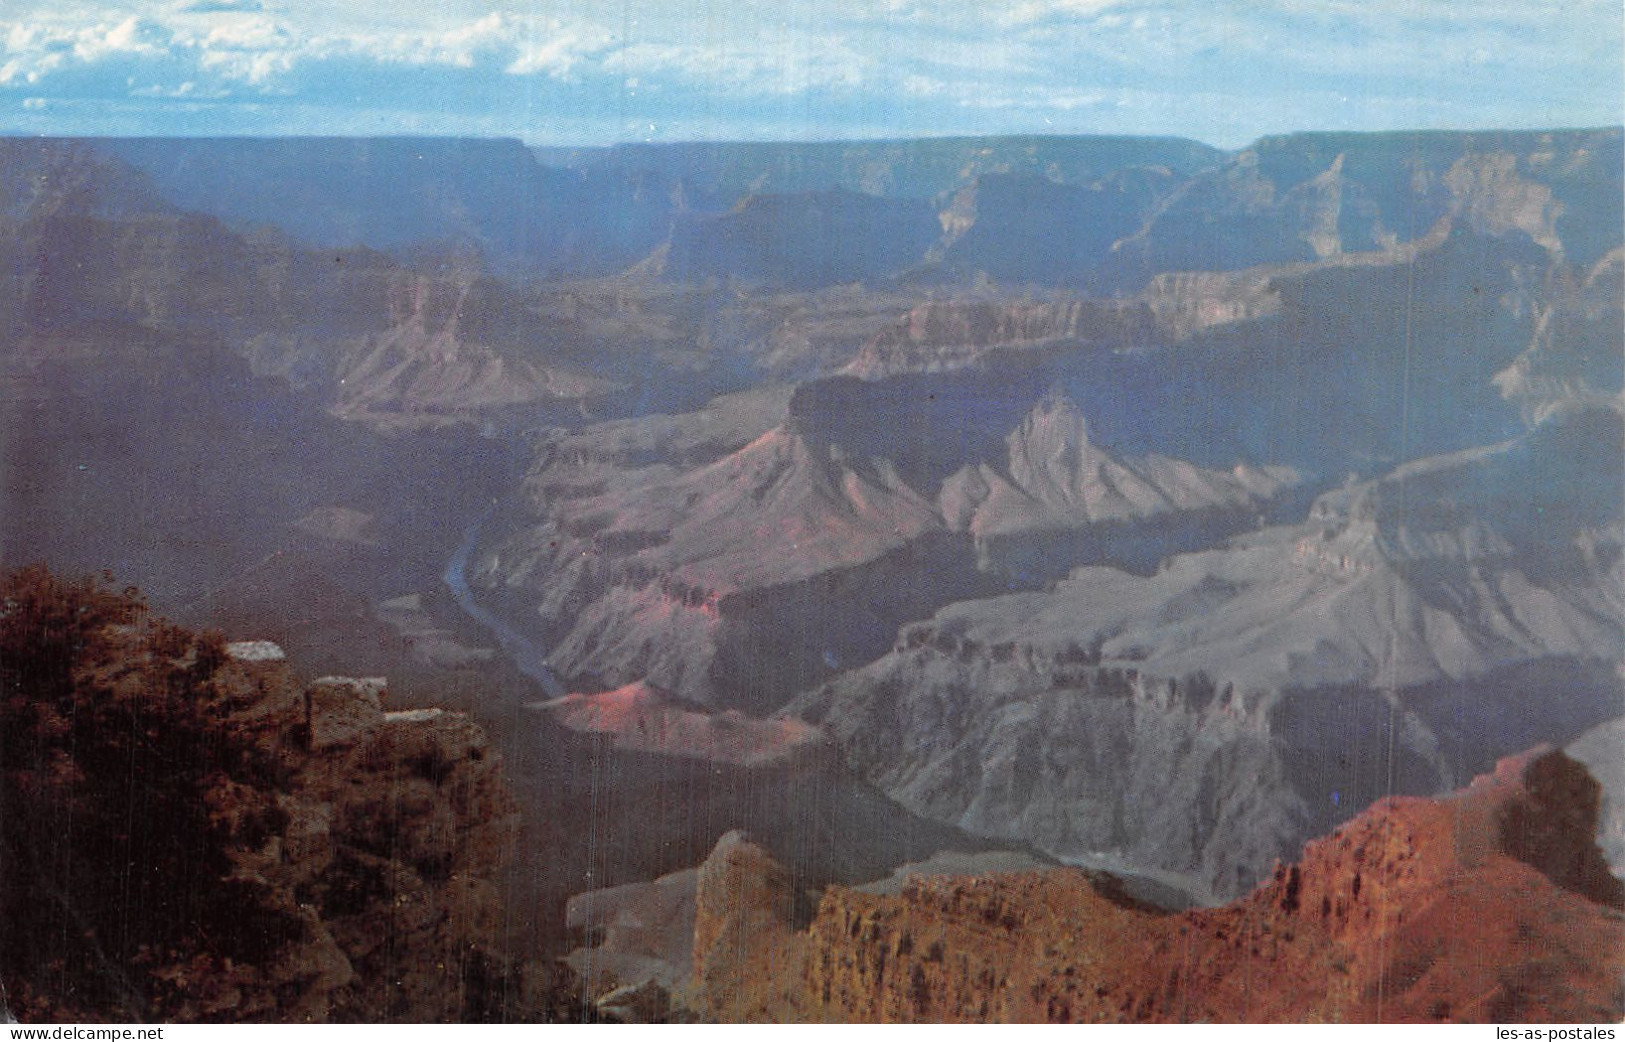 USA ARIZONA GRAND CANYON - Grand Canyon